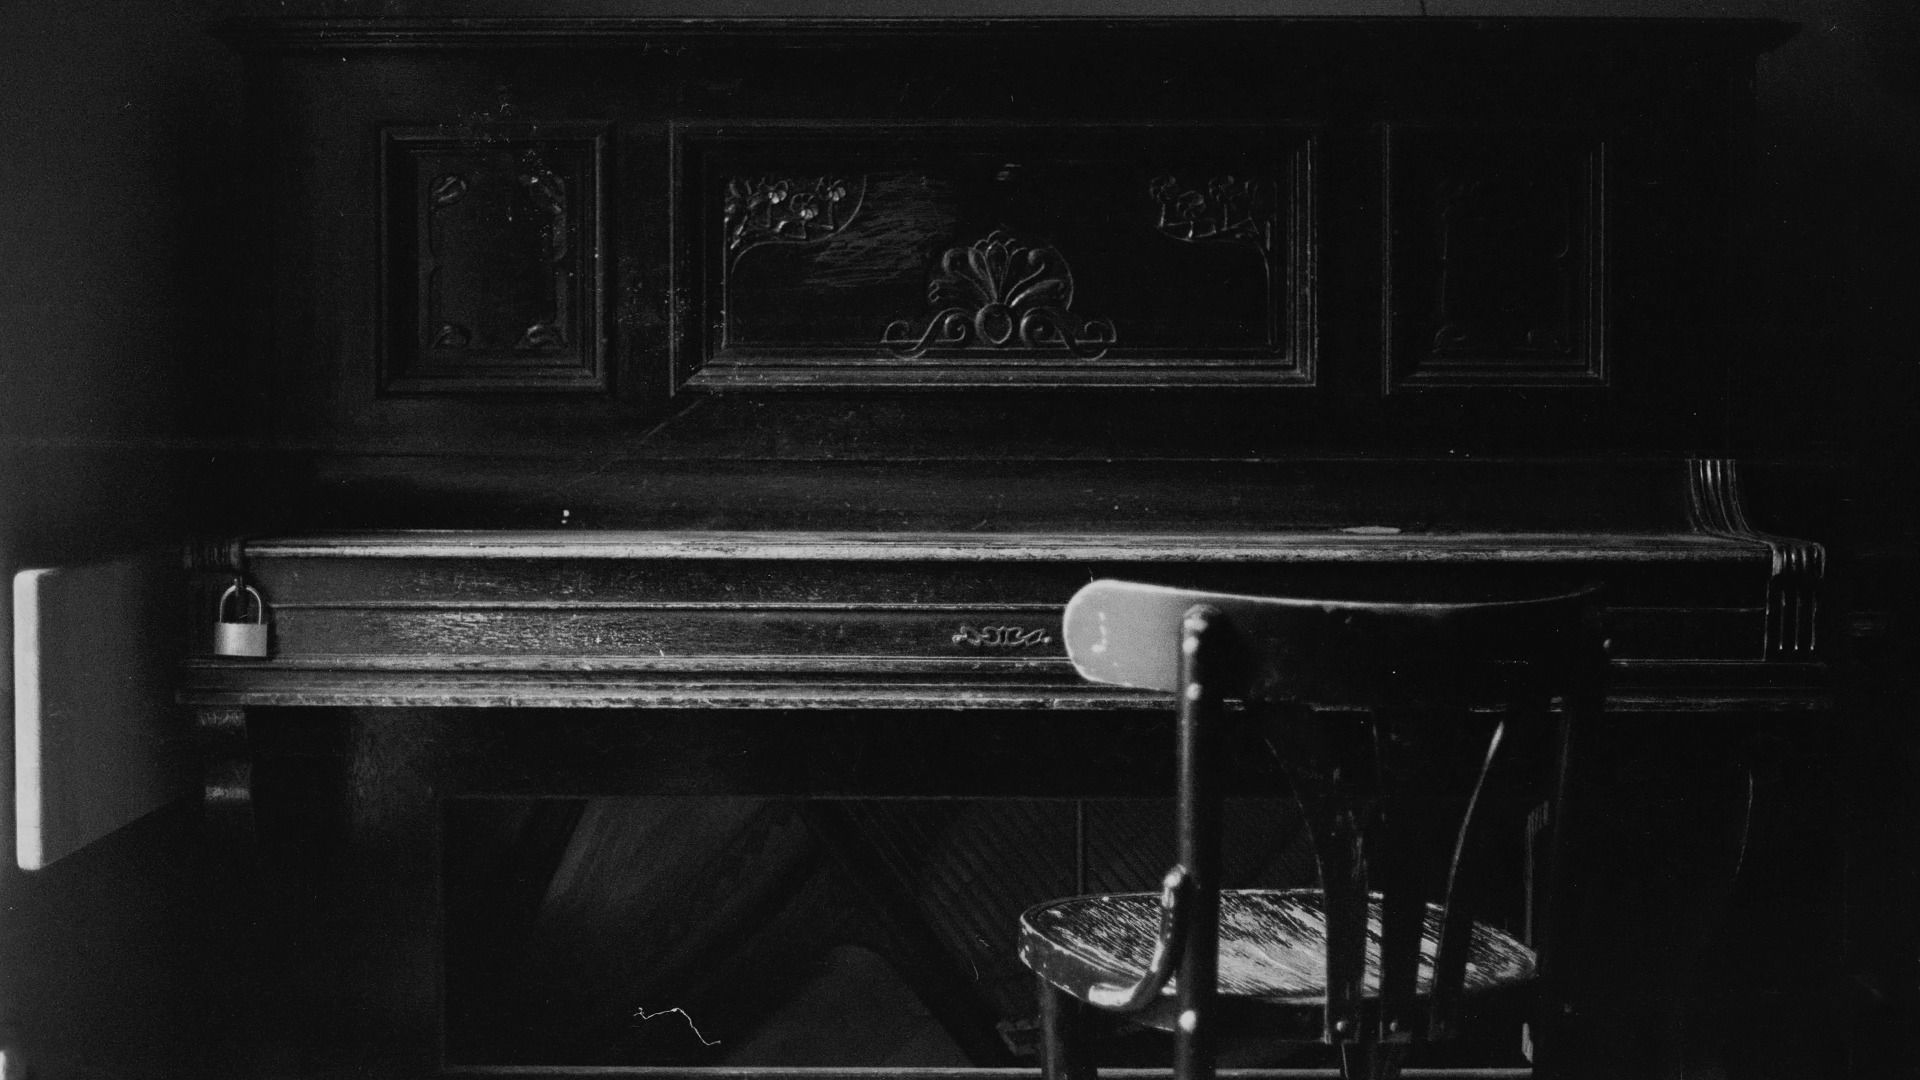 1920x1080 piano dark monochrome musical instrument old chair wallpaper JPG 395 kB